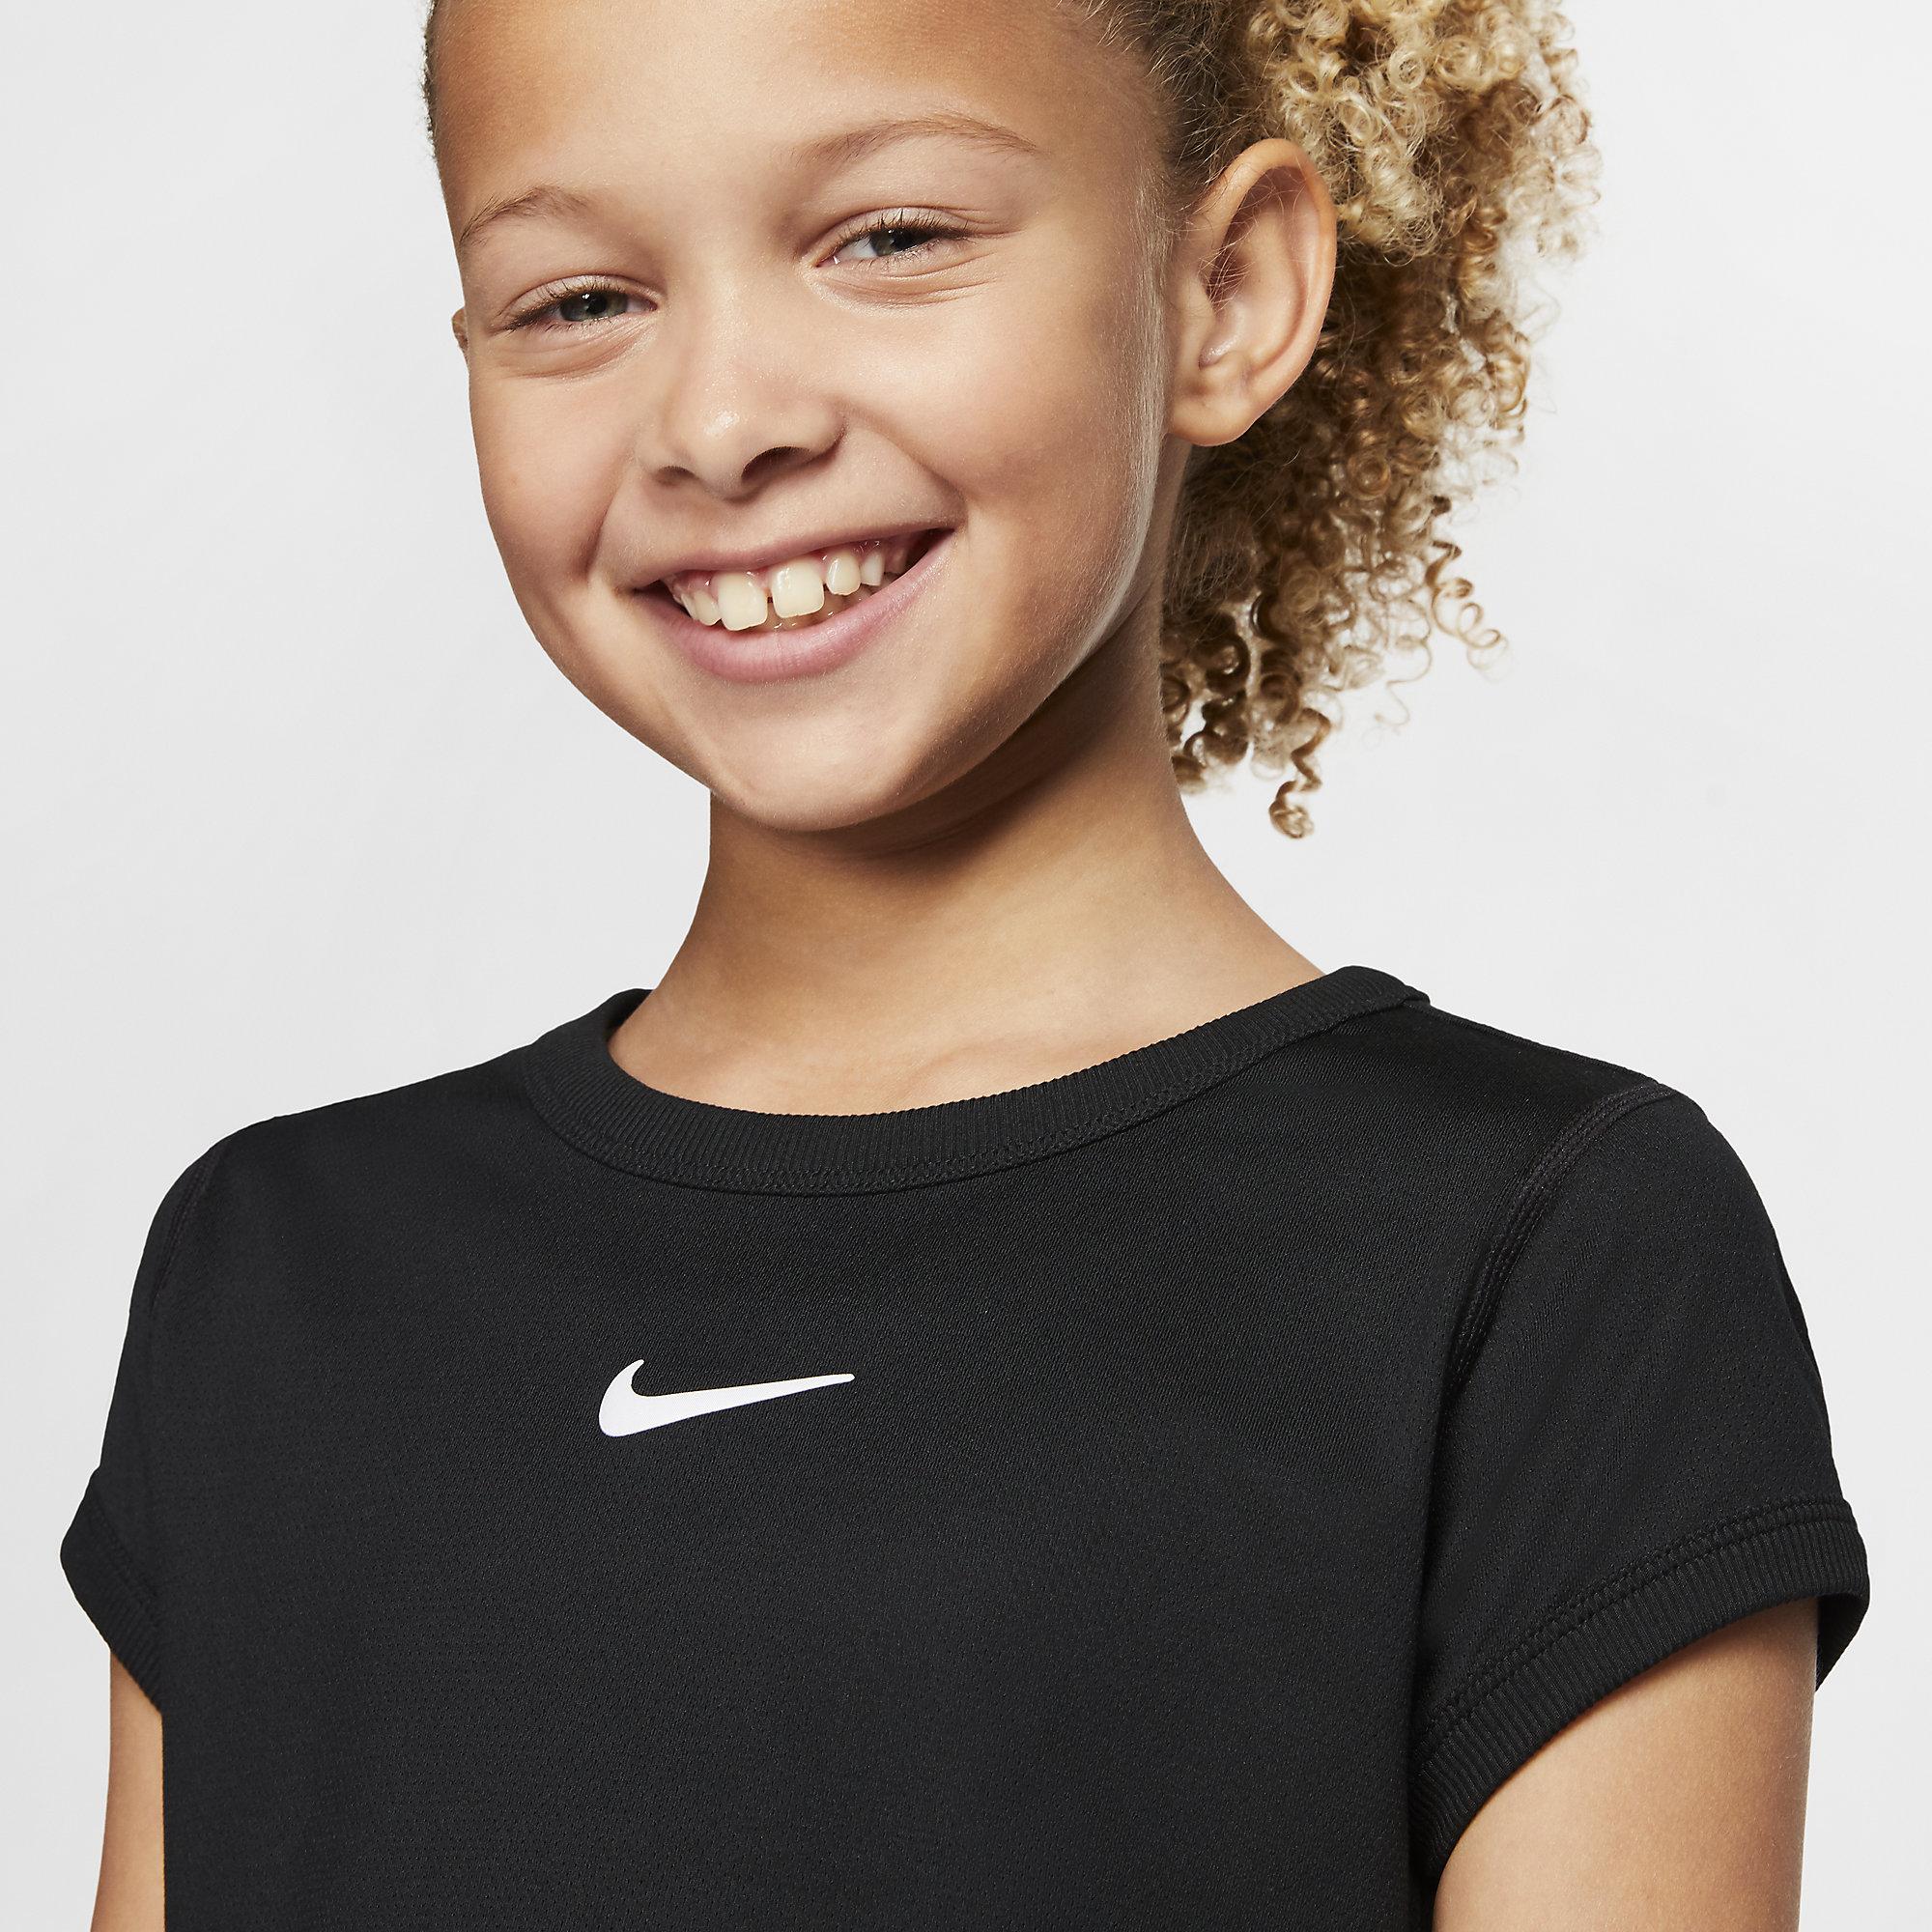 Nike Girls Dri-FIT Top - Black/White - Tennisnuts.com